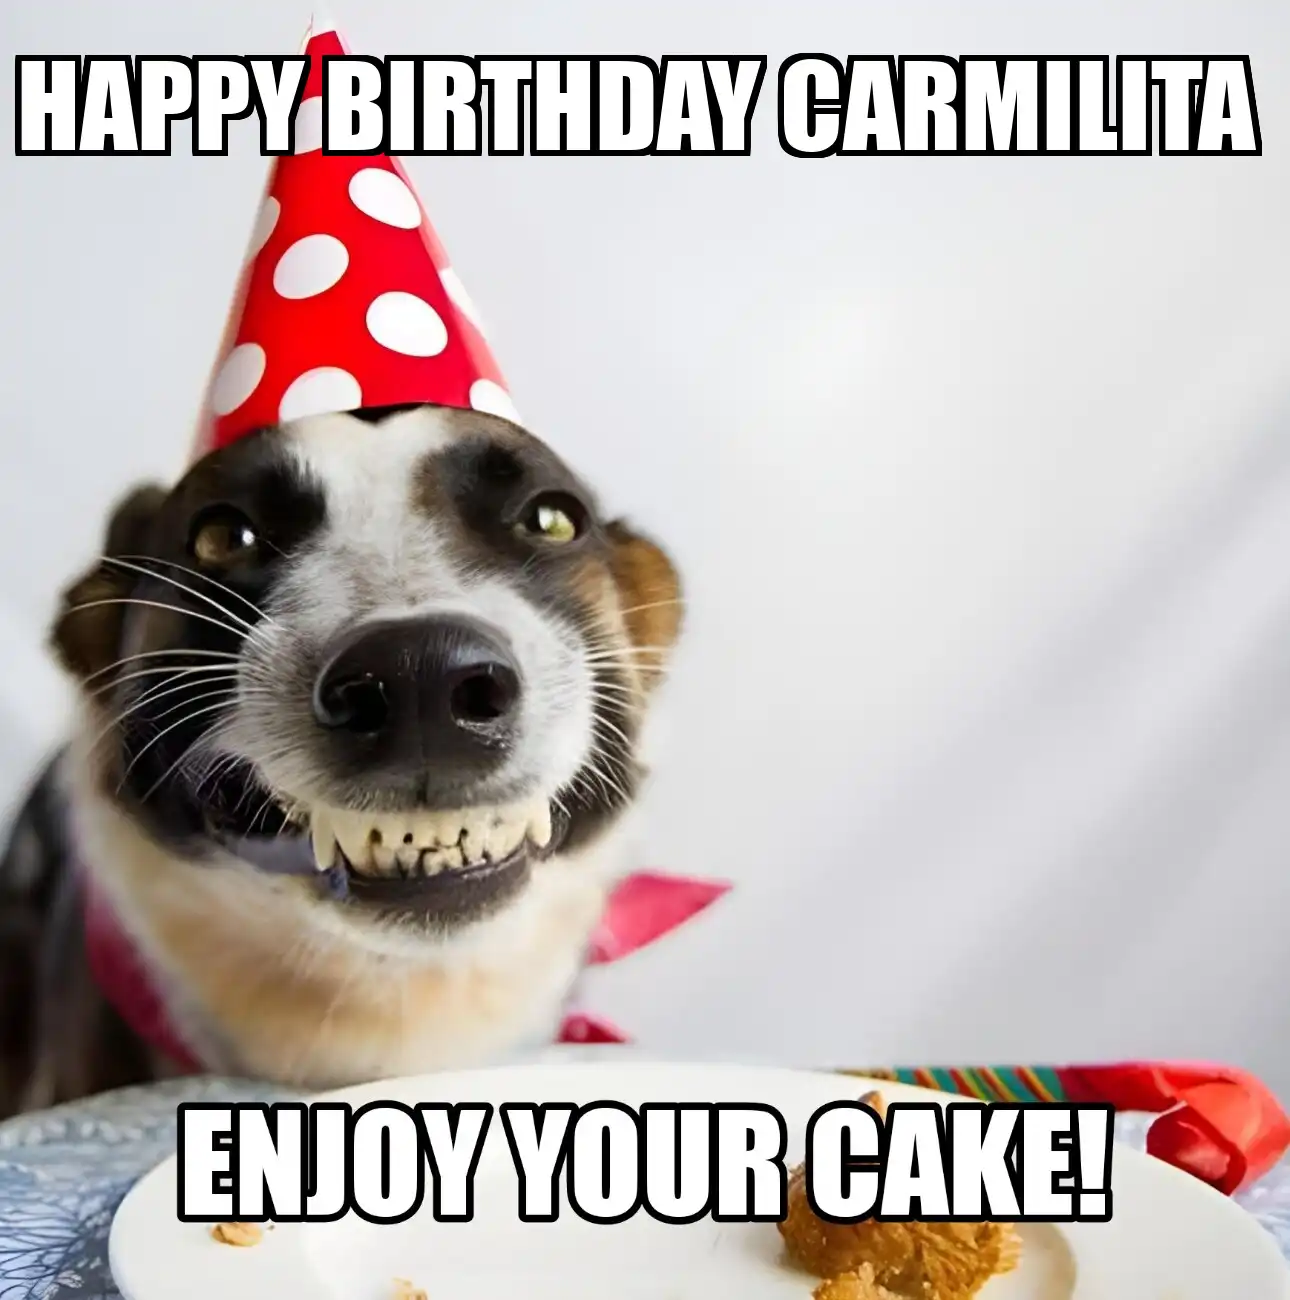 Happy Birthday Carmilita Enjoy Your Cake Dog Meme